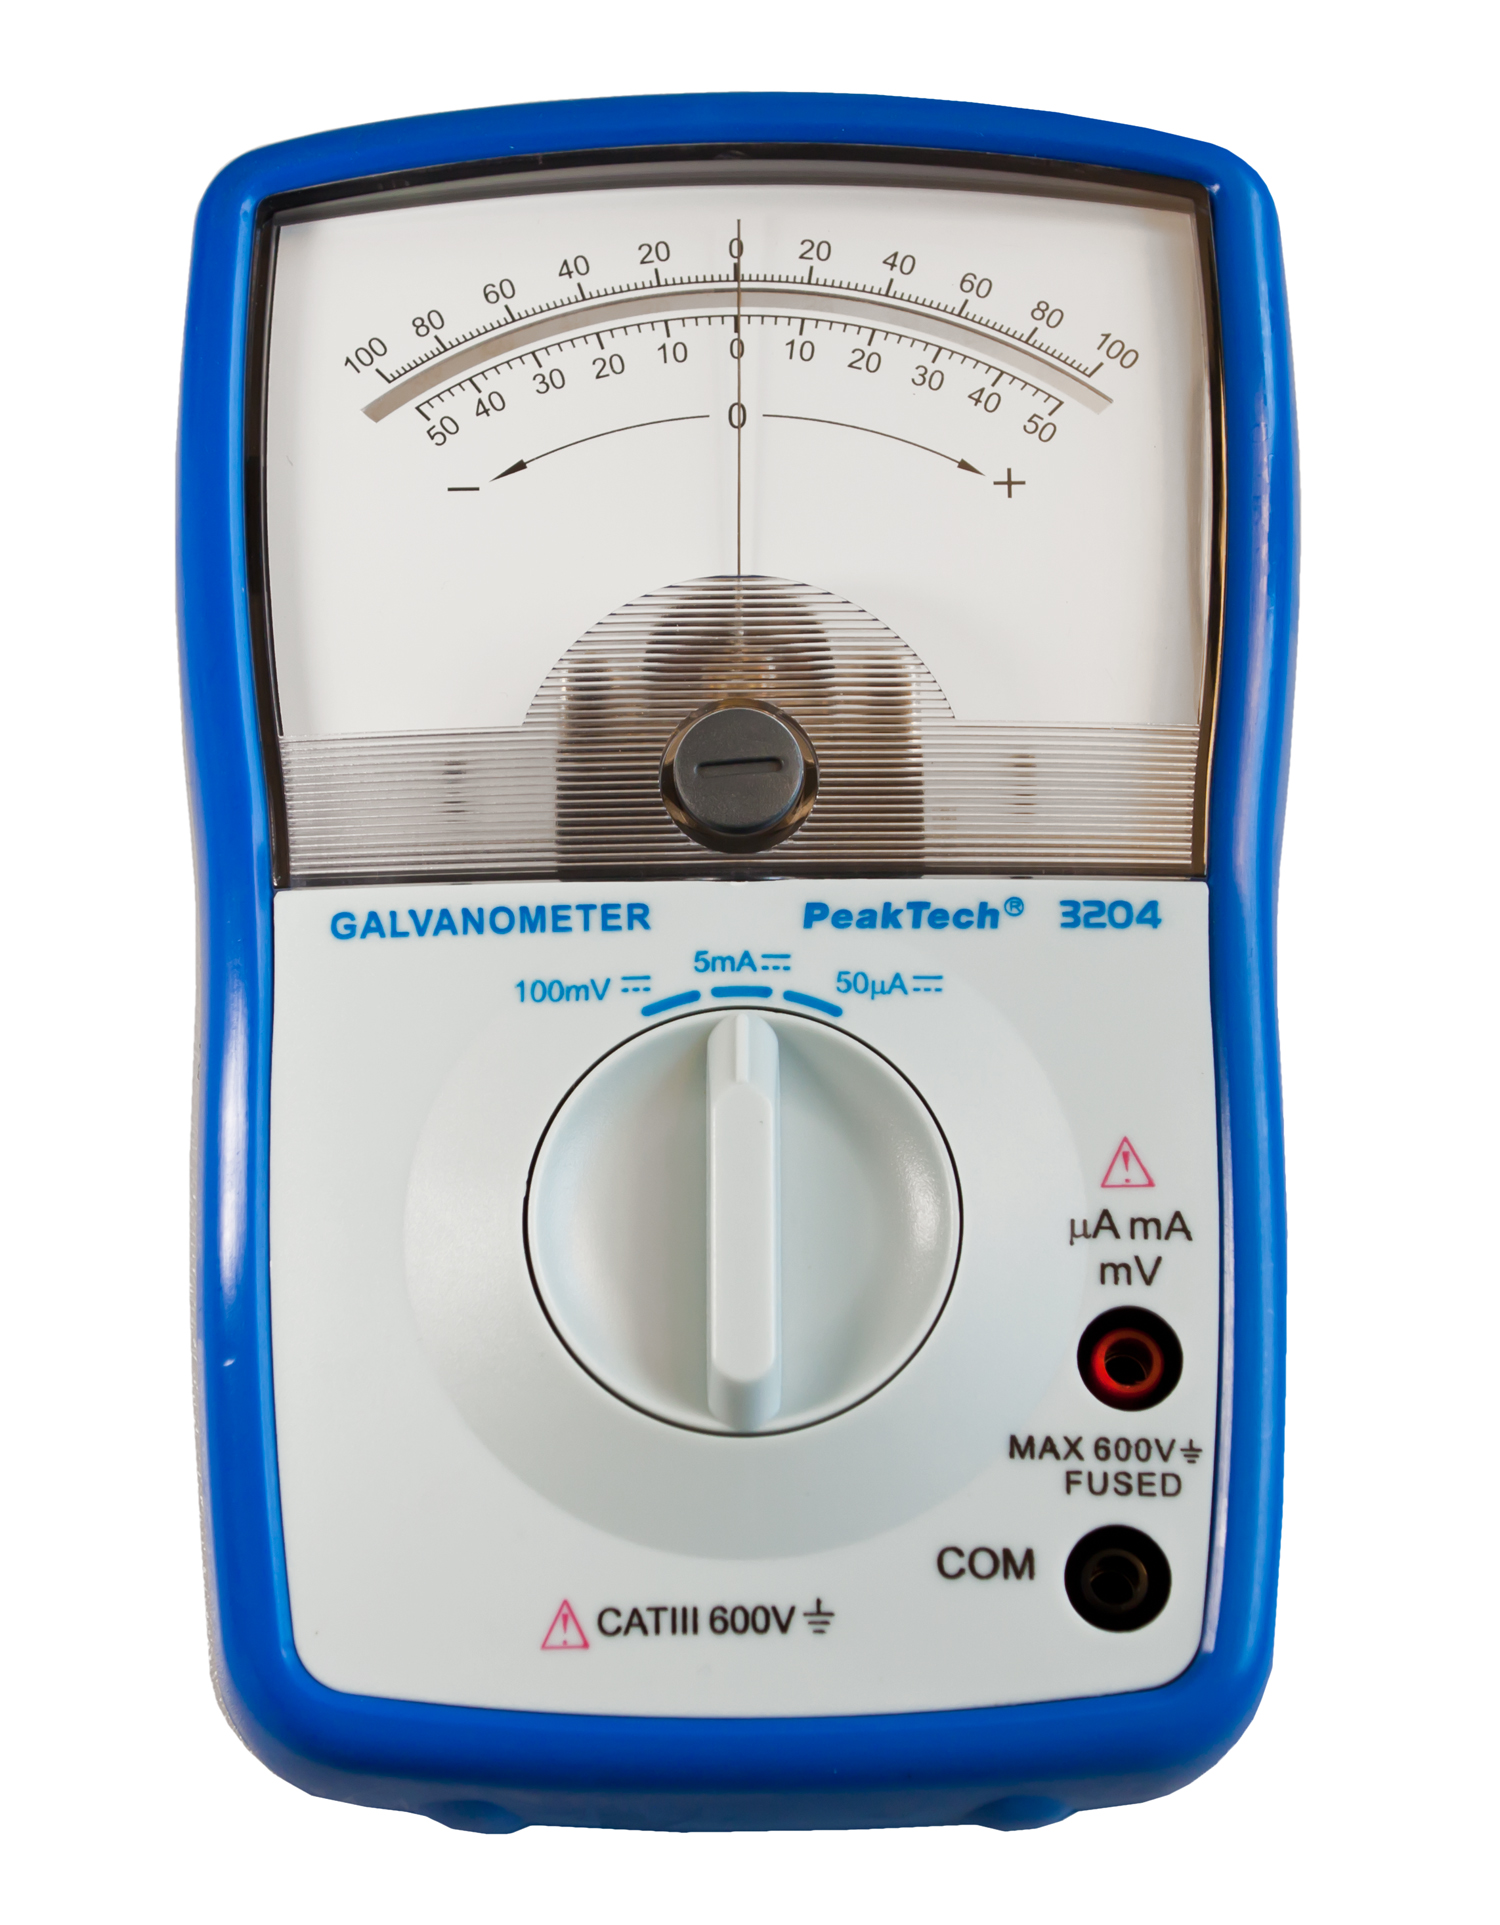 «PeakTech® P 3204» Analog galvanometer, +/- 50µA / 5 mA / 100 mV DC